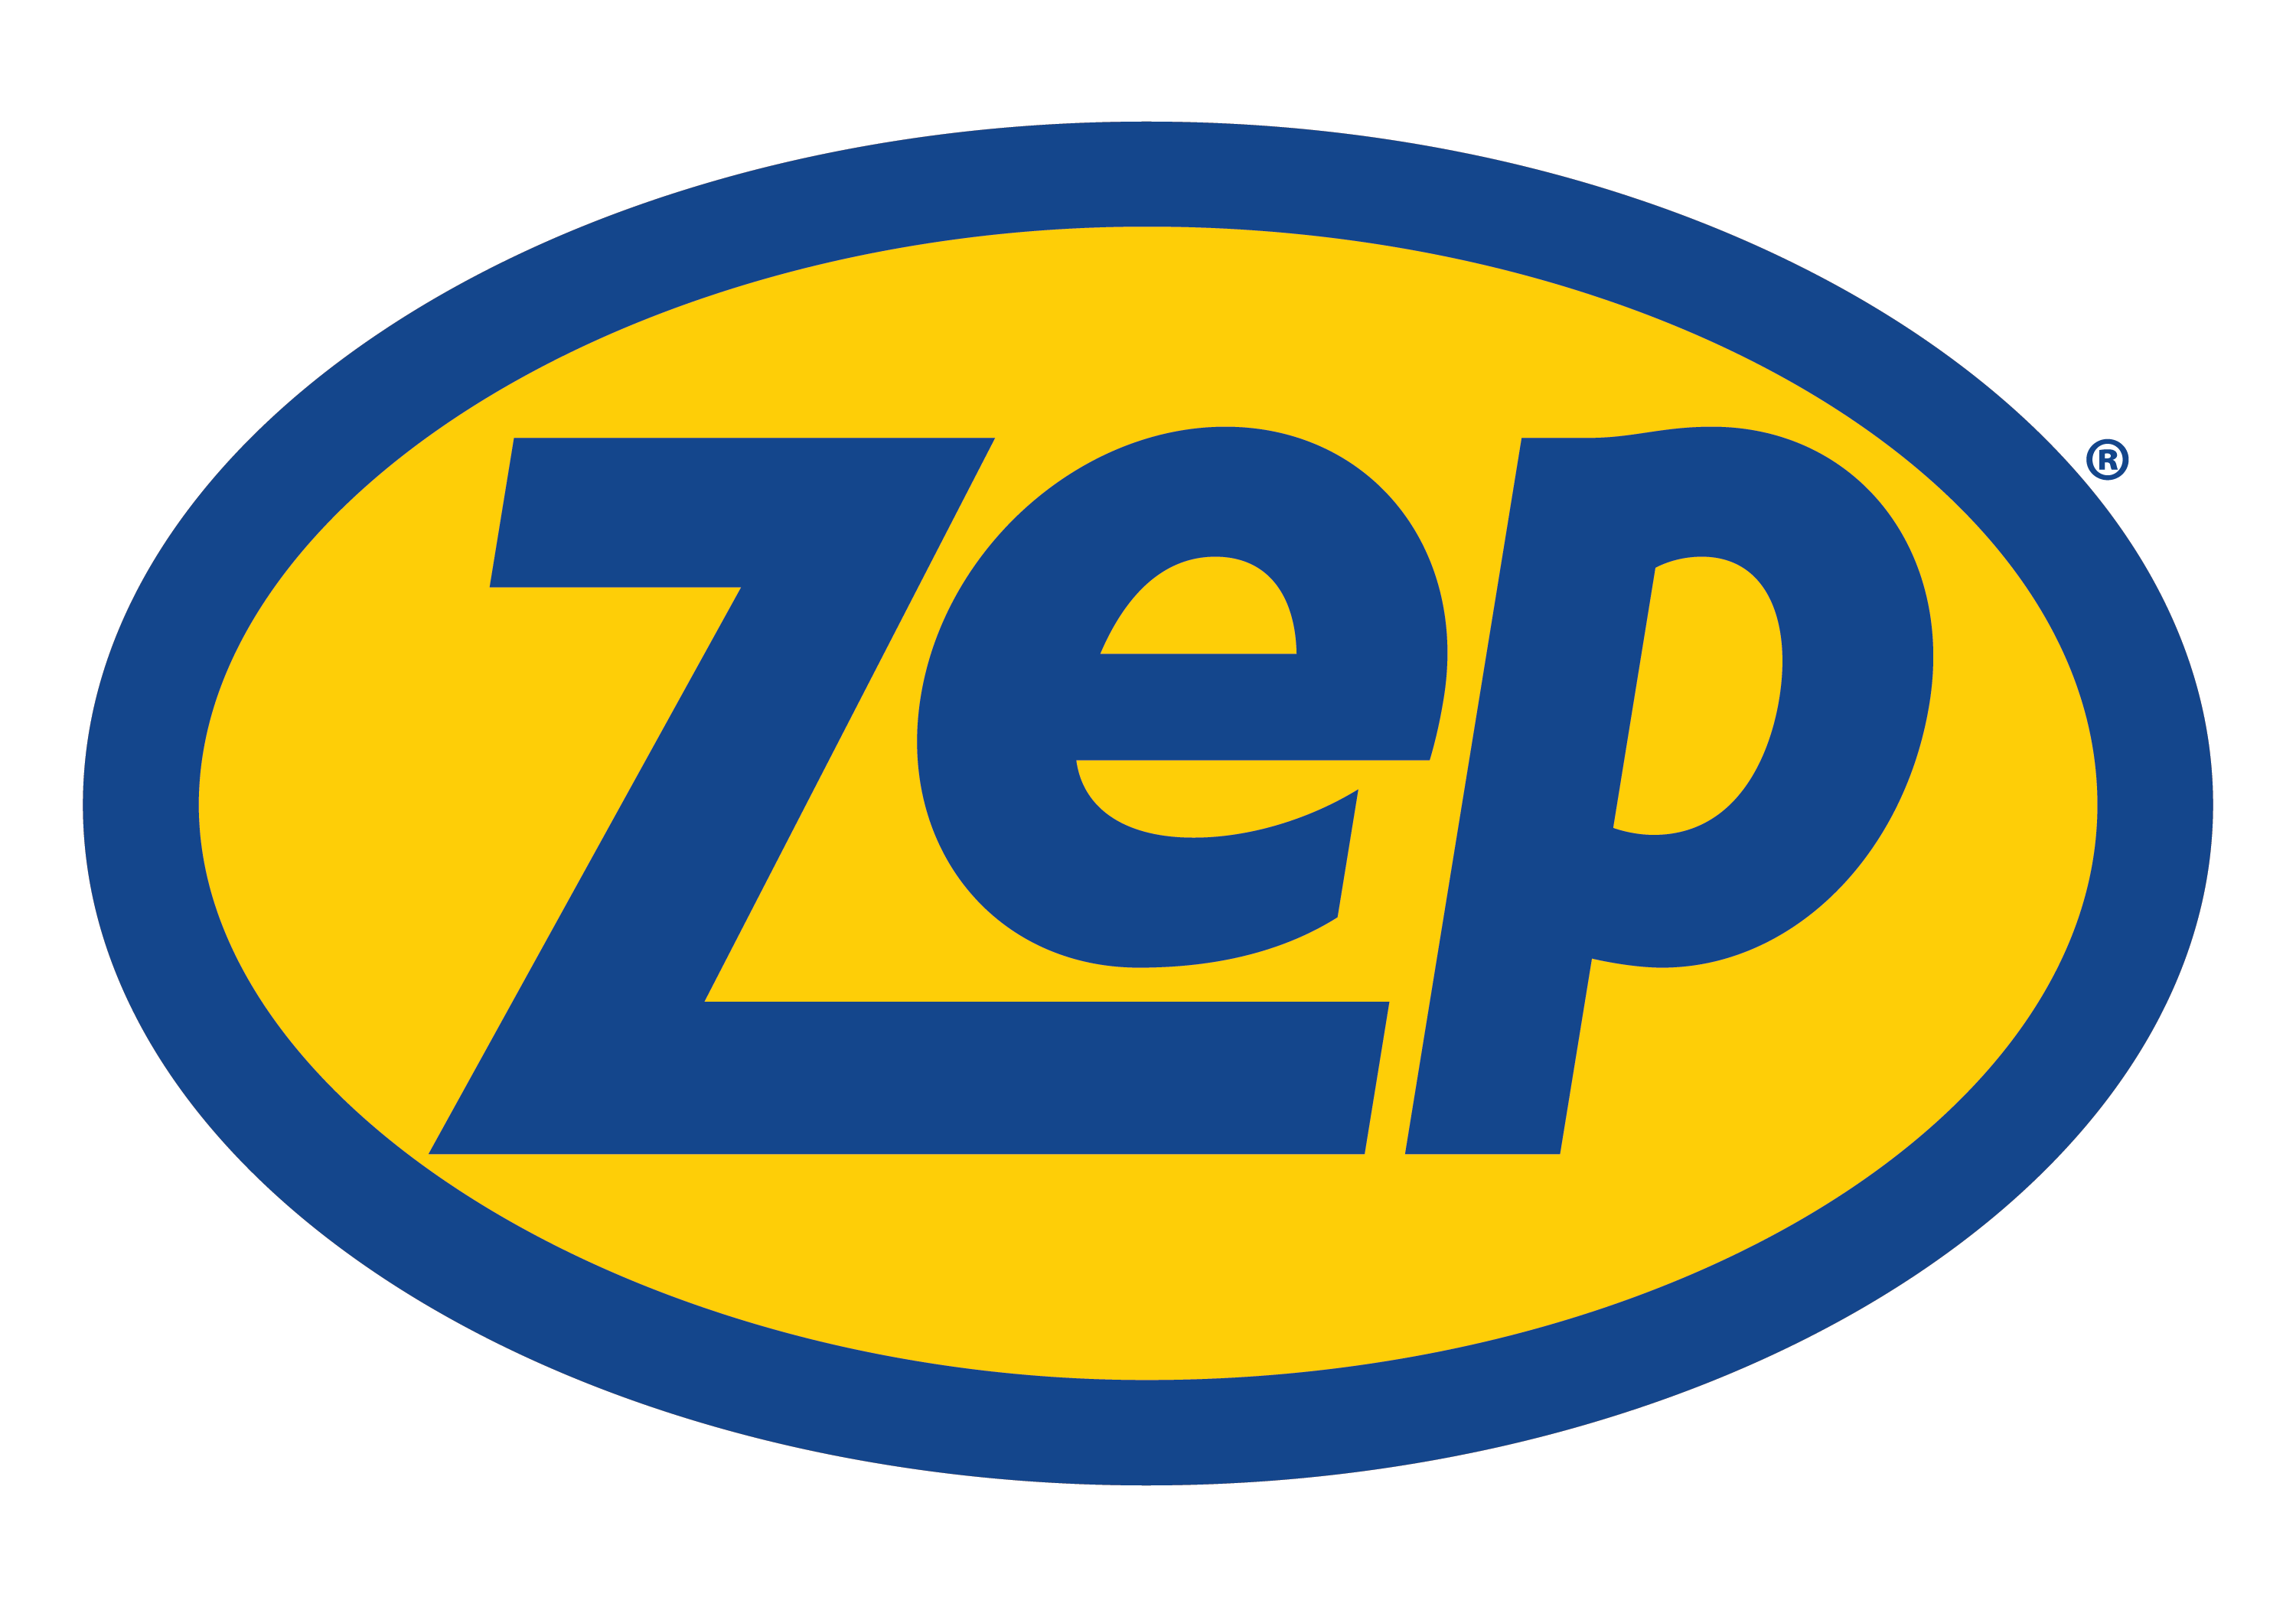 Zep UK Limited